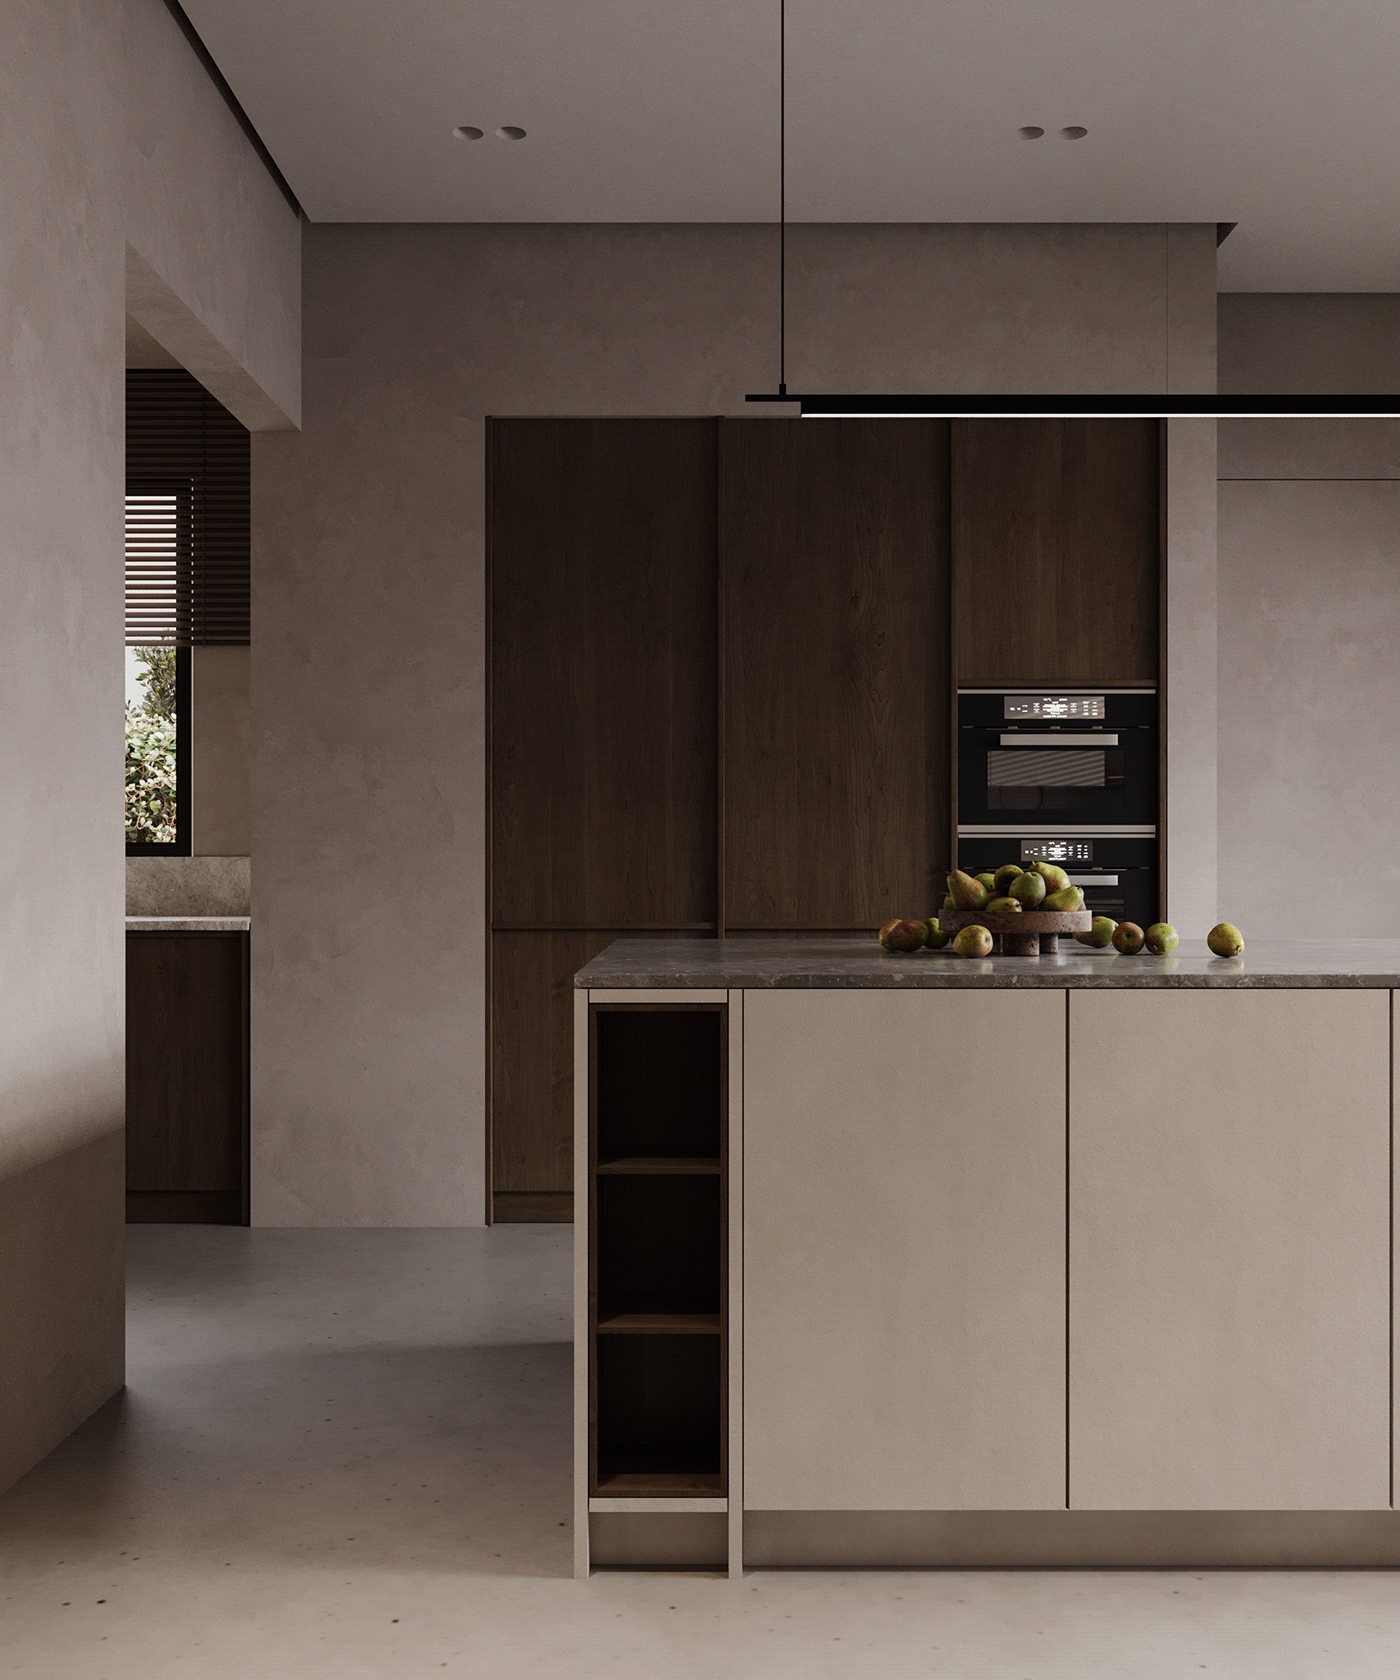 3ds max corona render  design Interior interior design  kitchen kitchen design Pantry Render rendering